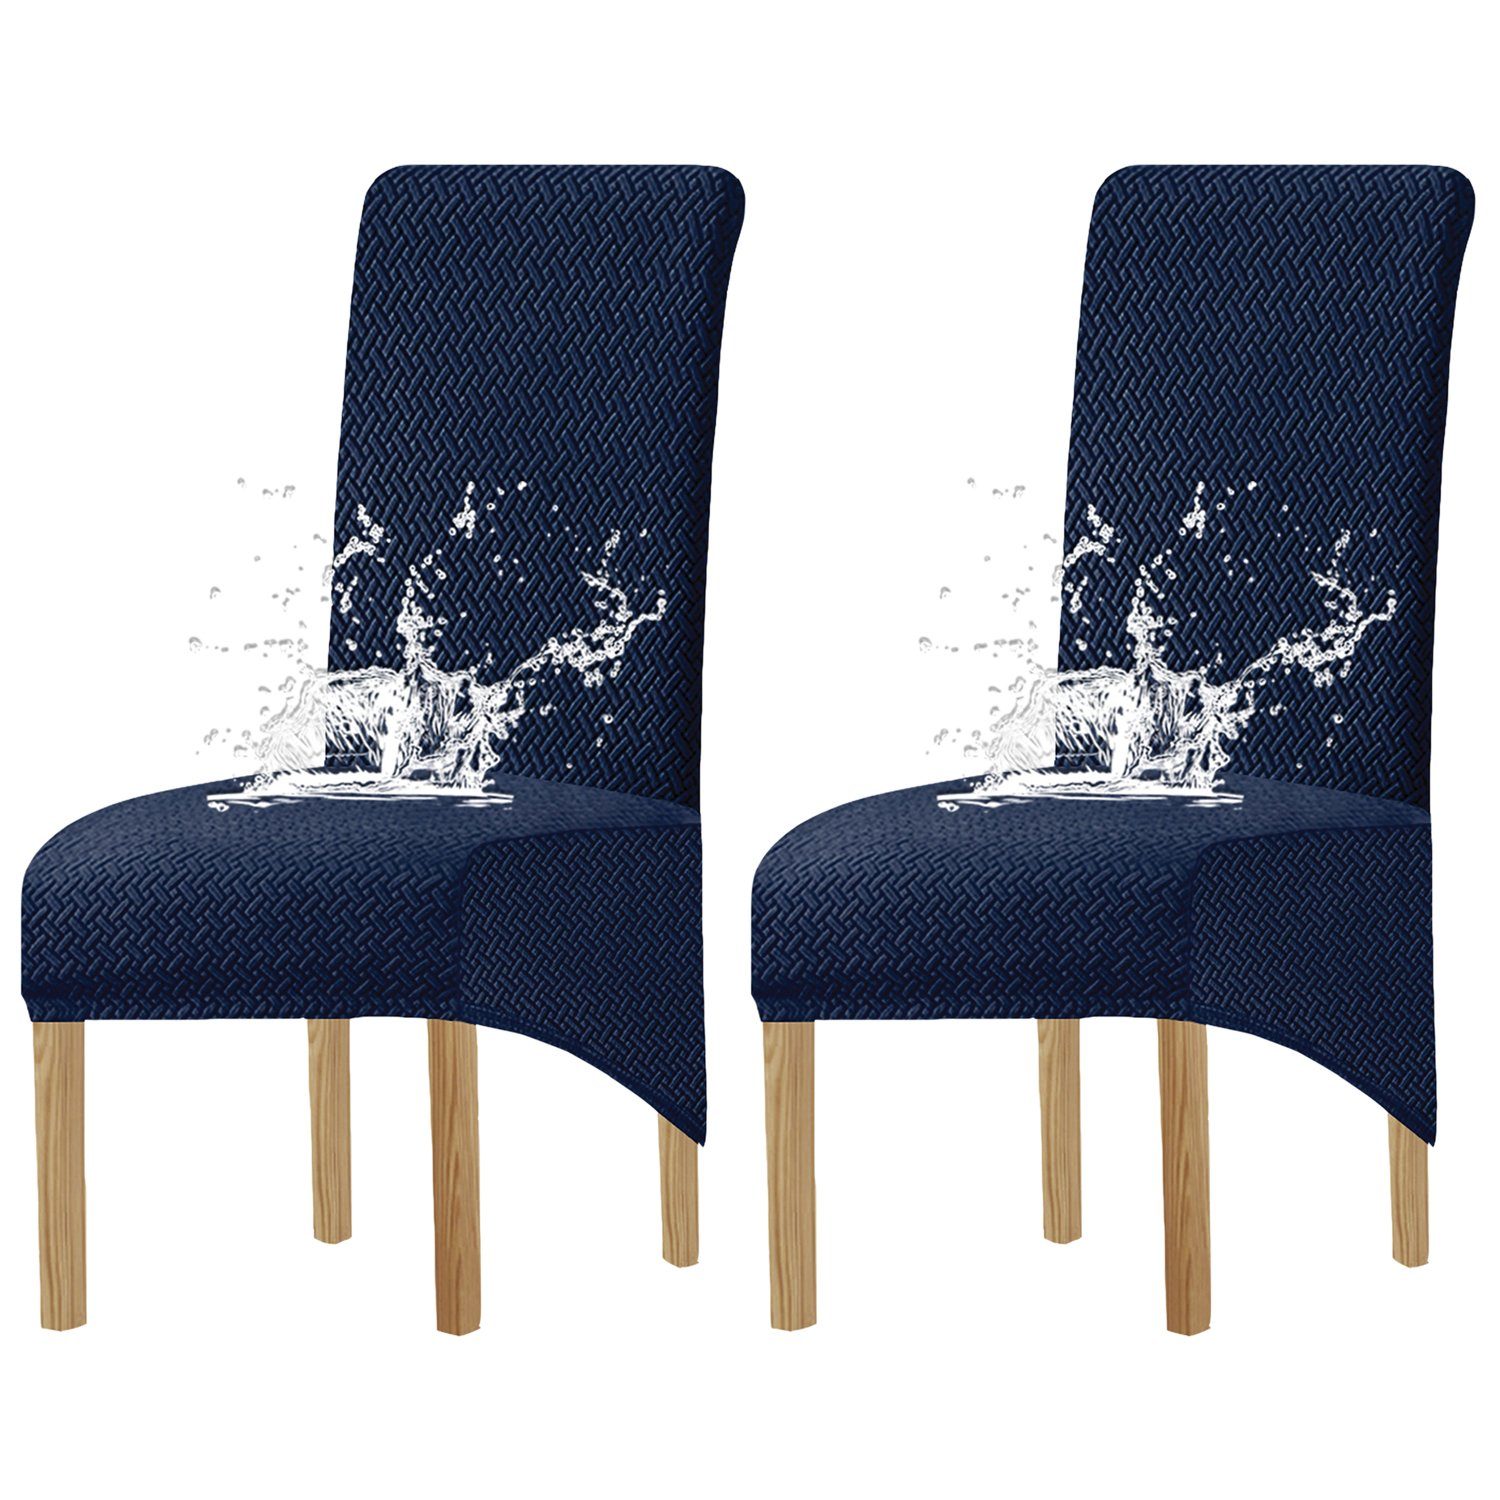 Stuhlhusse, HOMEIDEAS, Stretch Jacquard übergroß geflochtene Textur Stuhlbezug Blau | Stuhlhussen